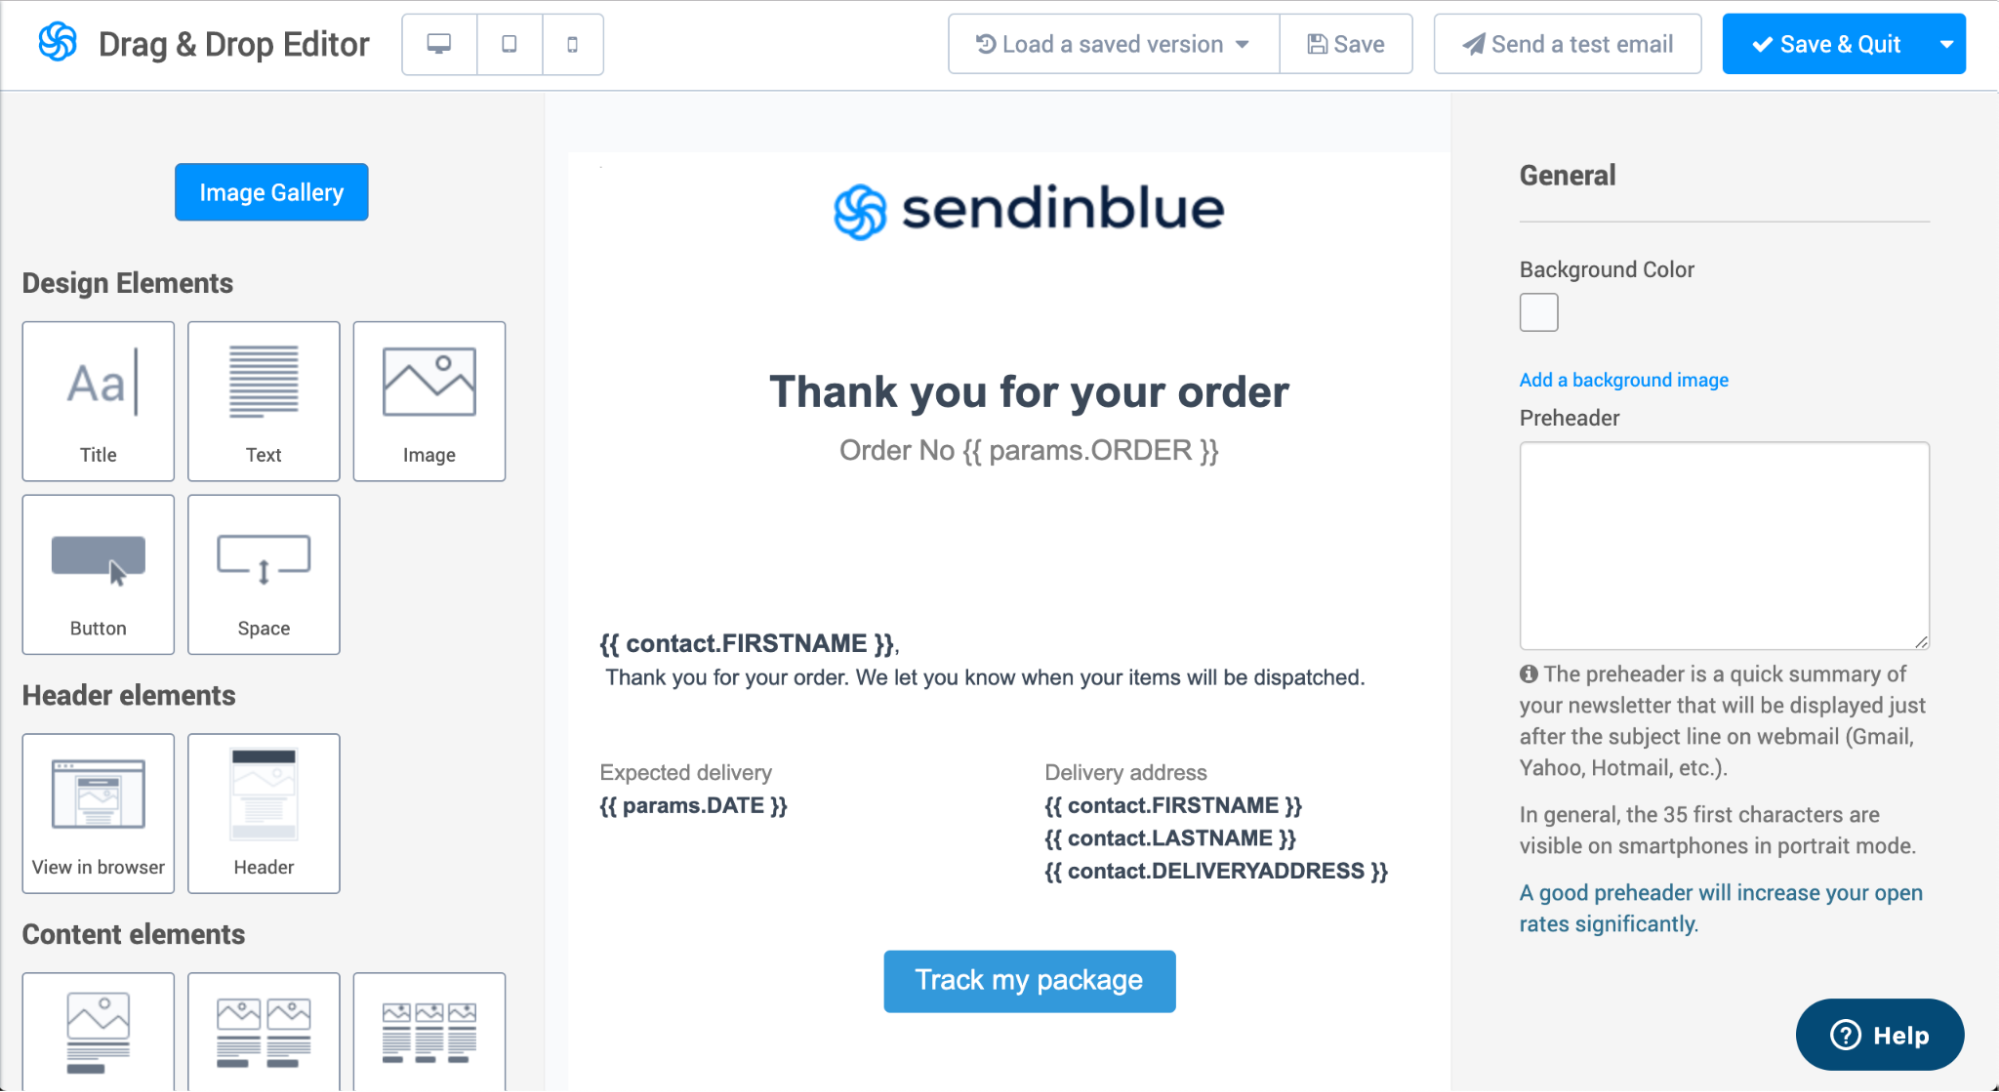 Email marketing solution for SMB - Sendinblue